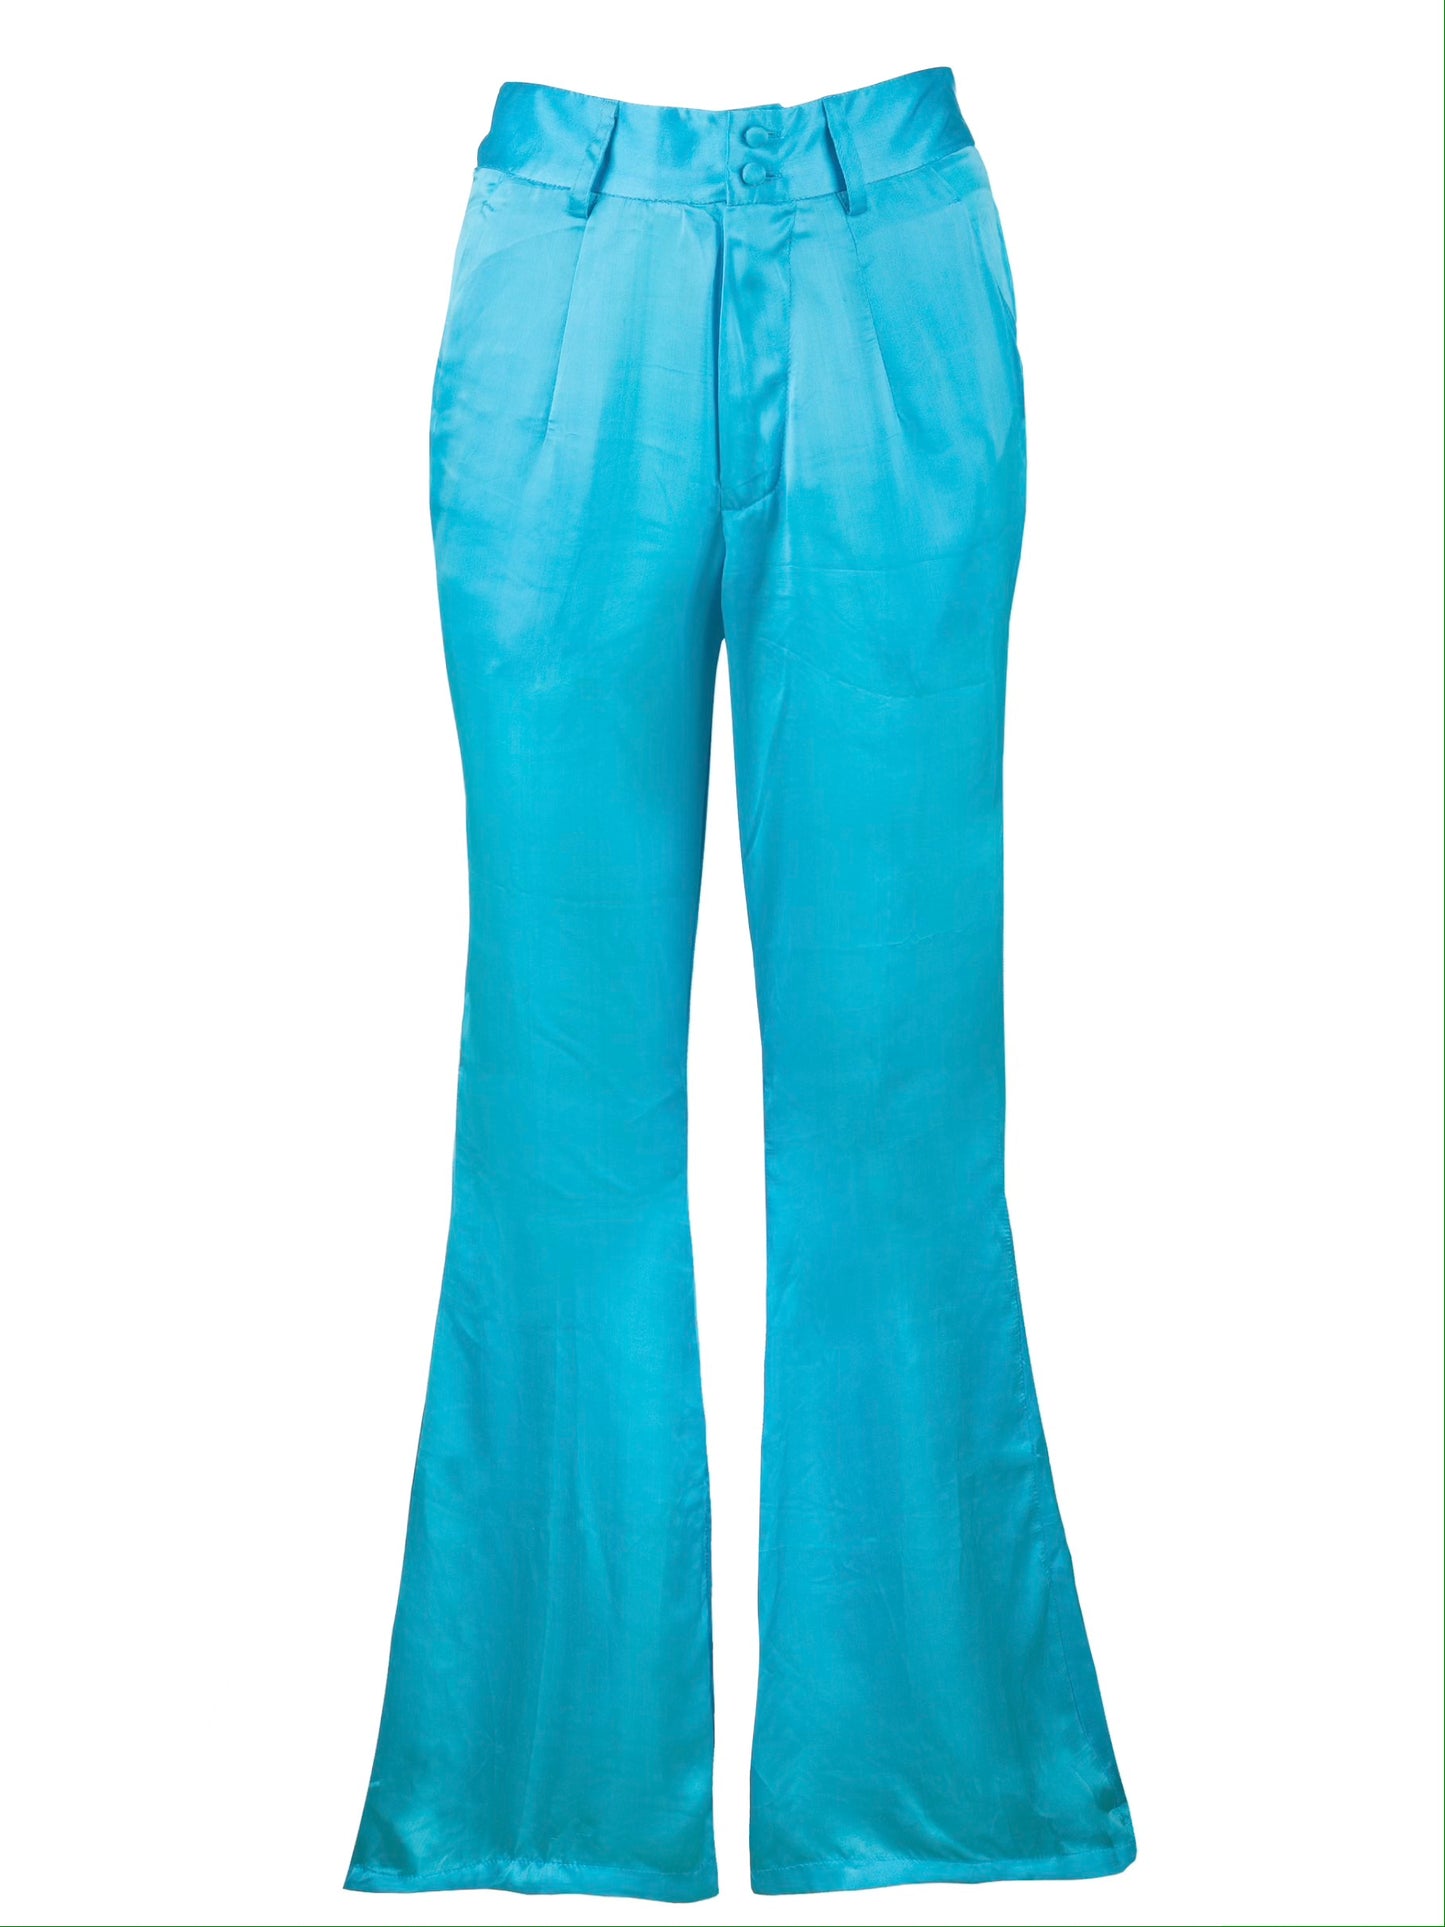 Manhattan pants